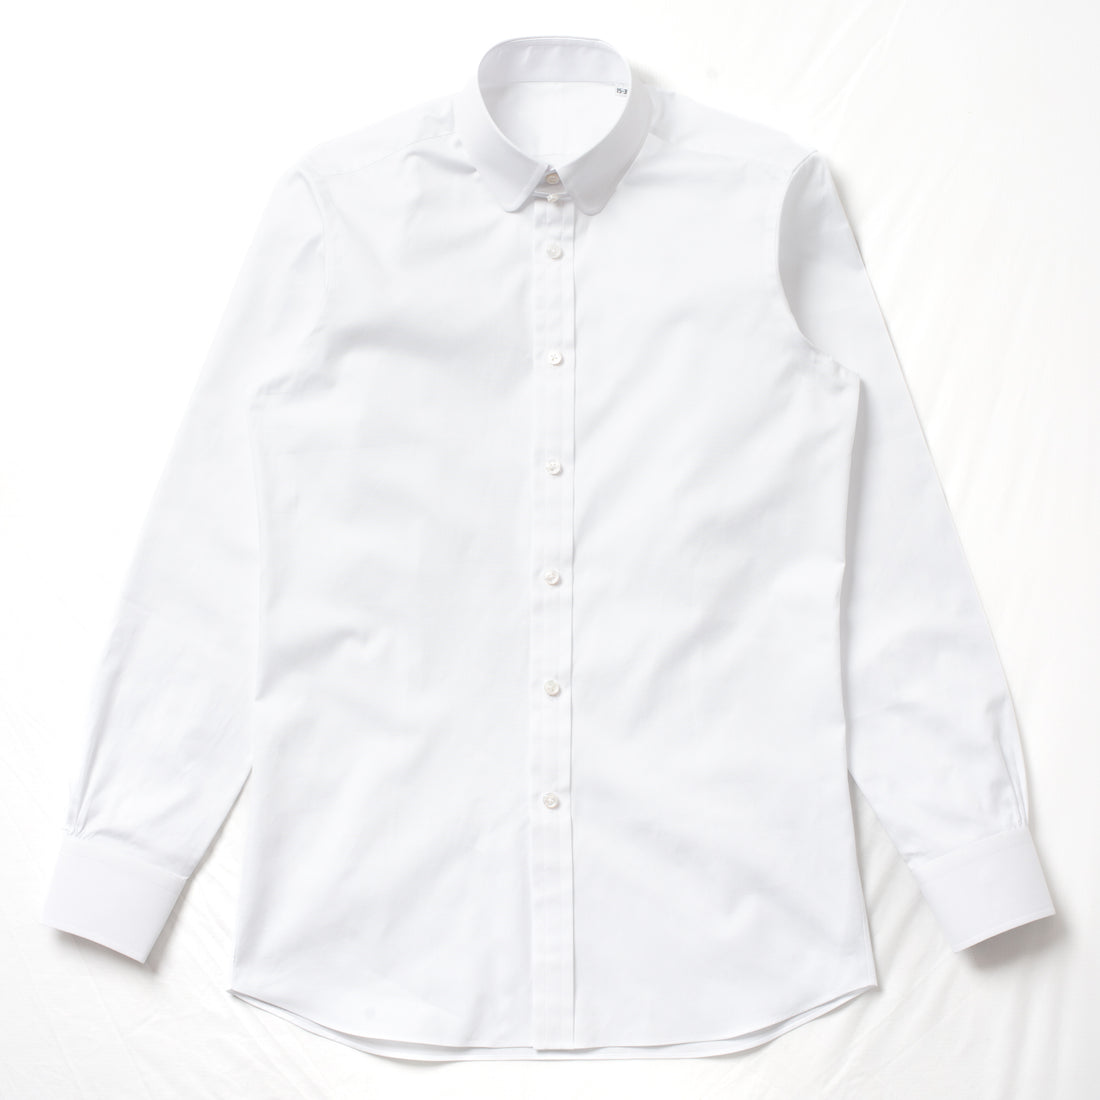 Bryceland's Club Tab Collar Shirt White